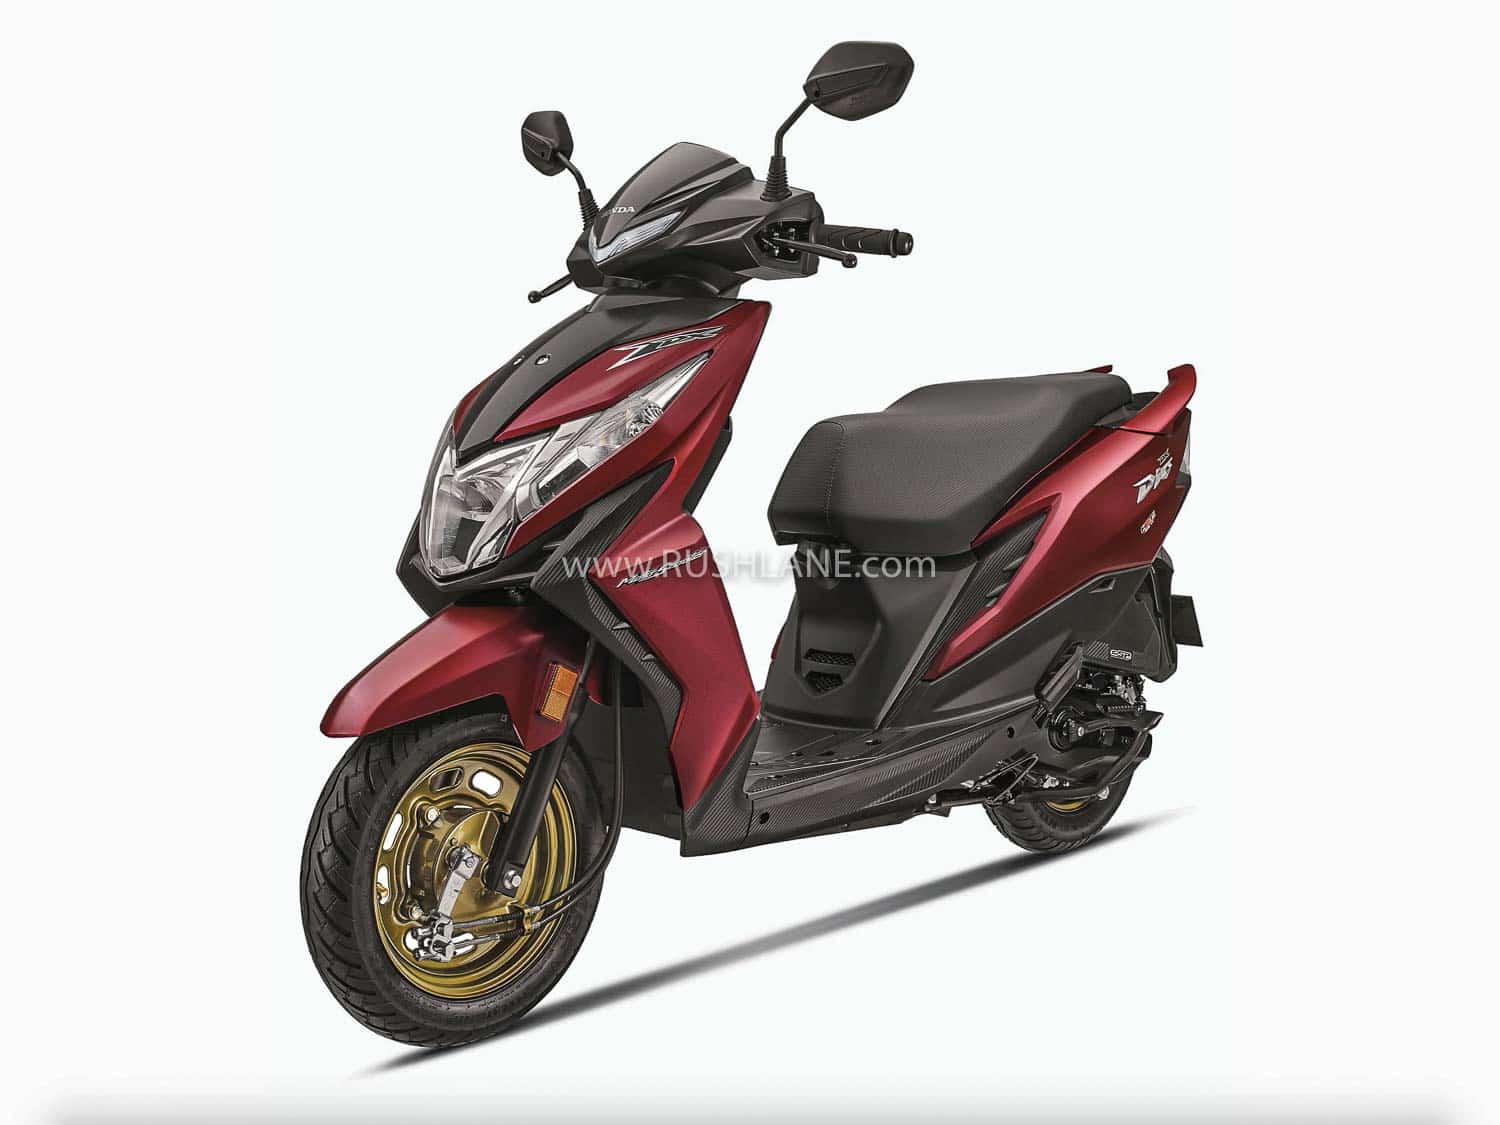 2020 Honda Dio BS6 launch price